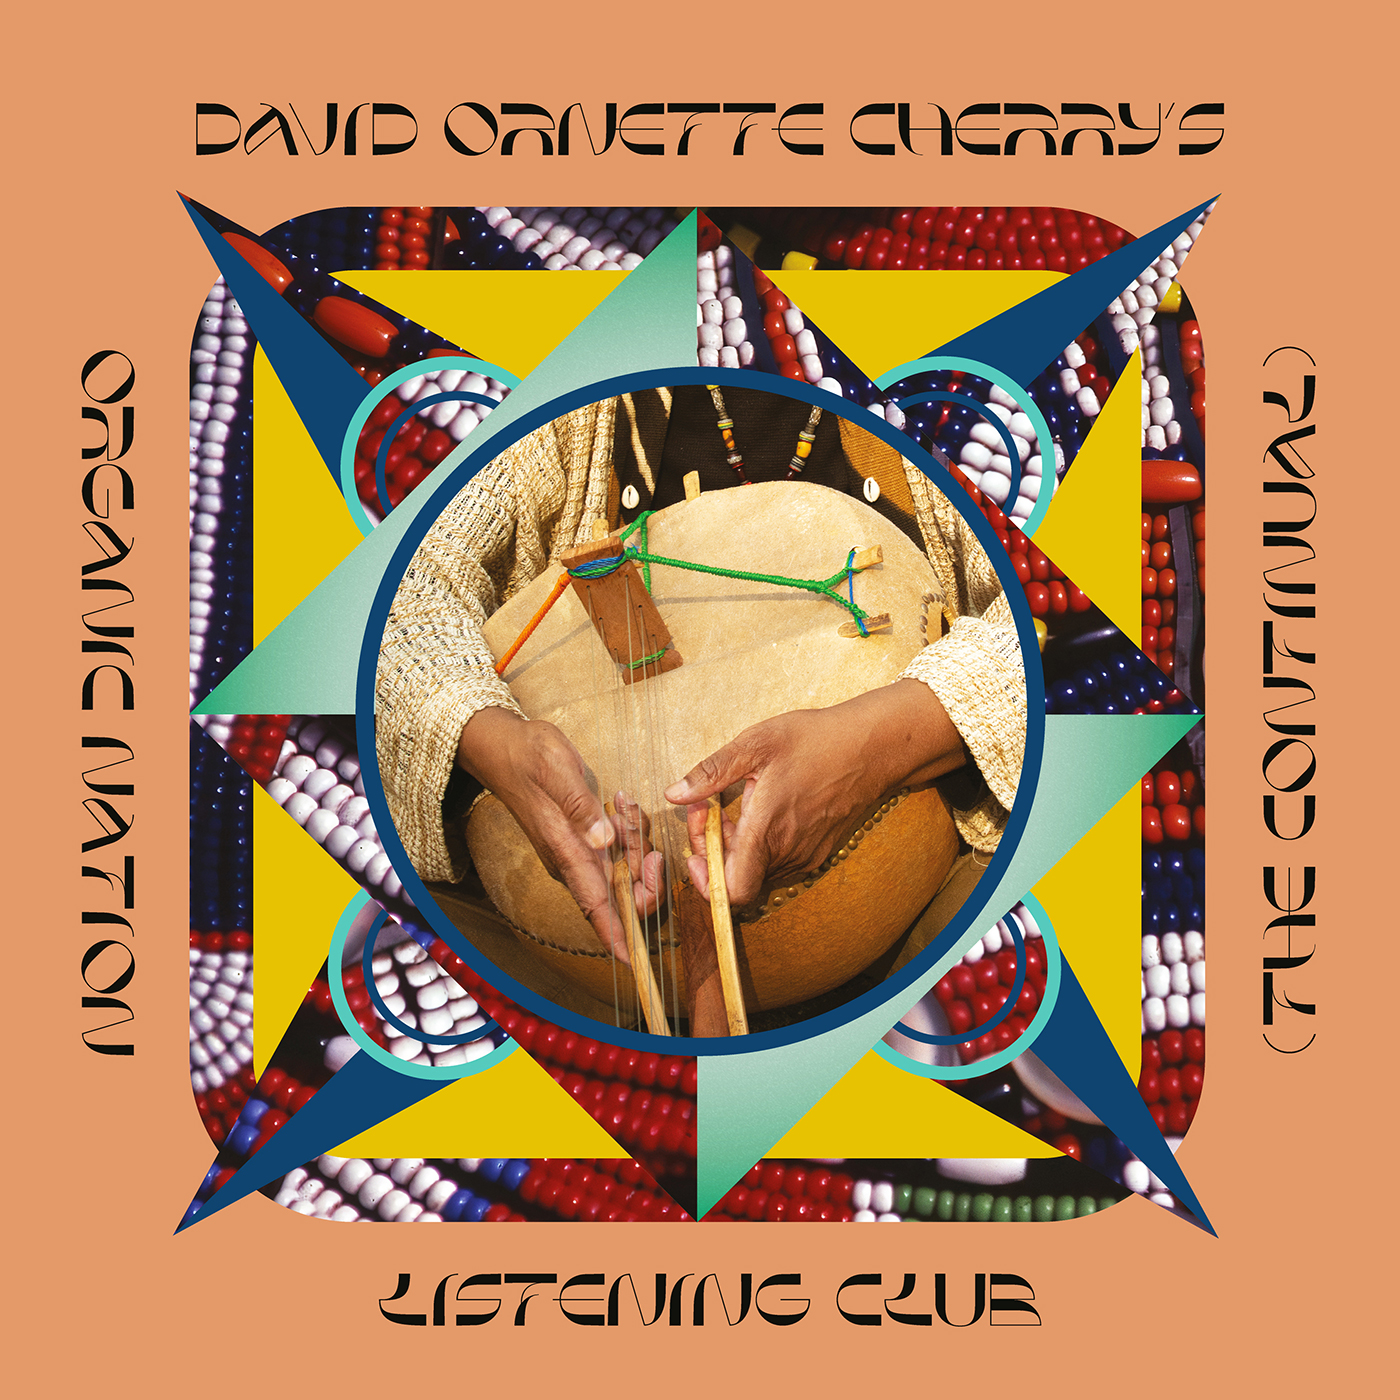 SPM006-David-Ornette-Cherry-Organic-Nation-Listening-Club-(the-continual)---Album-ArtSPM006 - David Ornette Cherry's Organic Nation Listening Club (the continual)